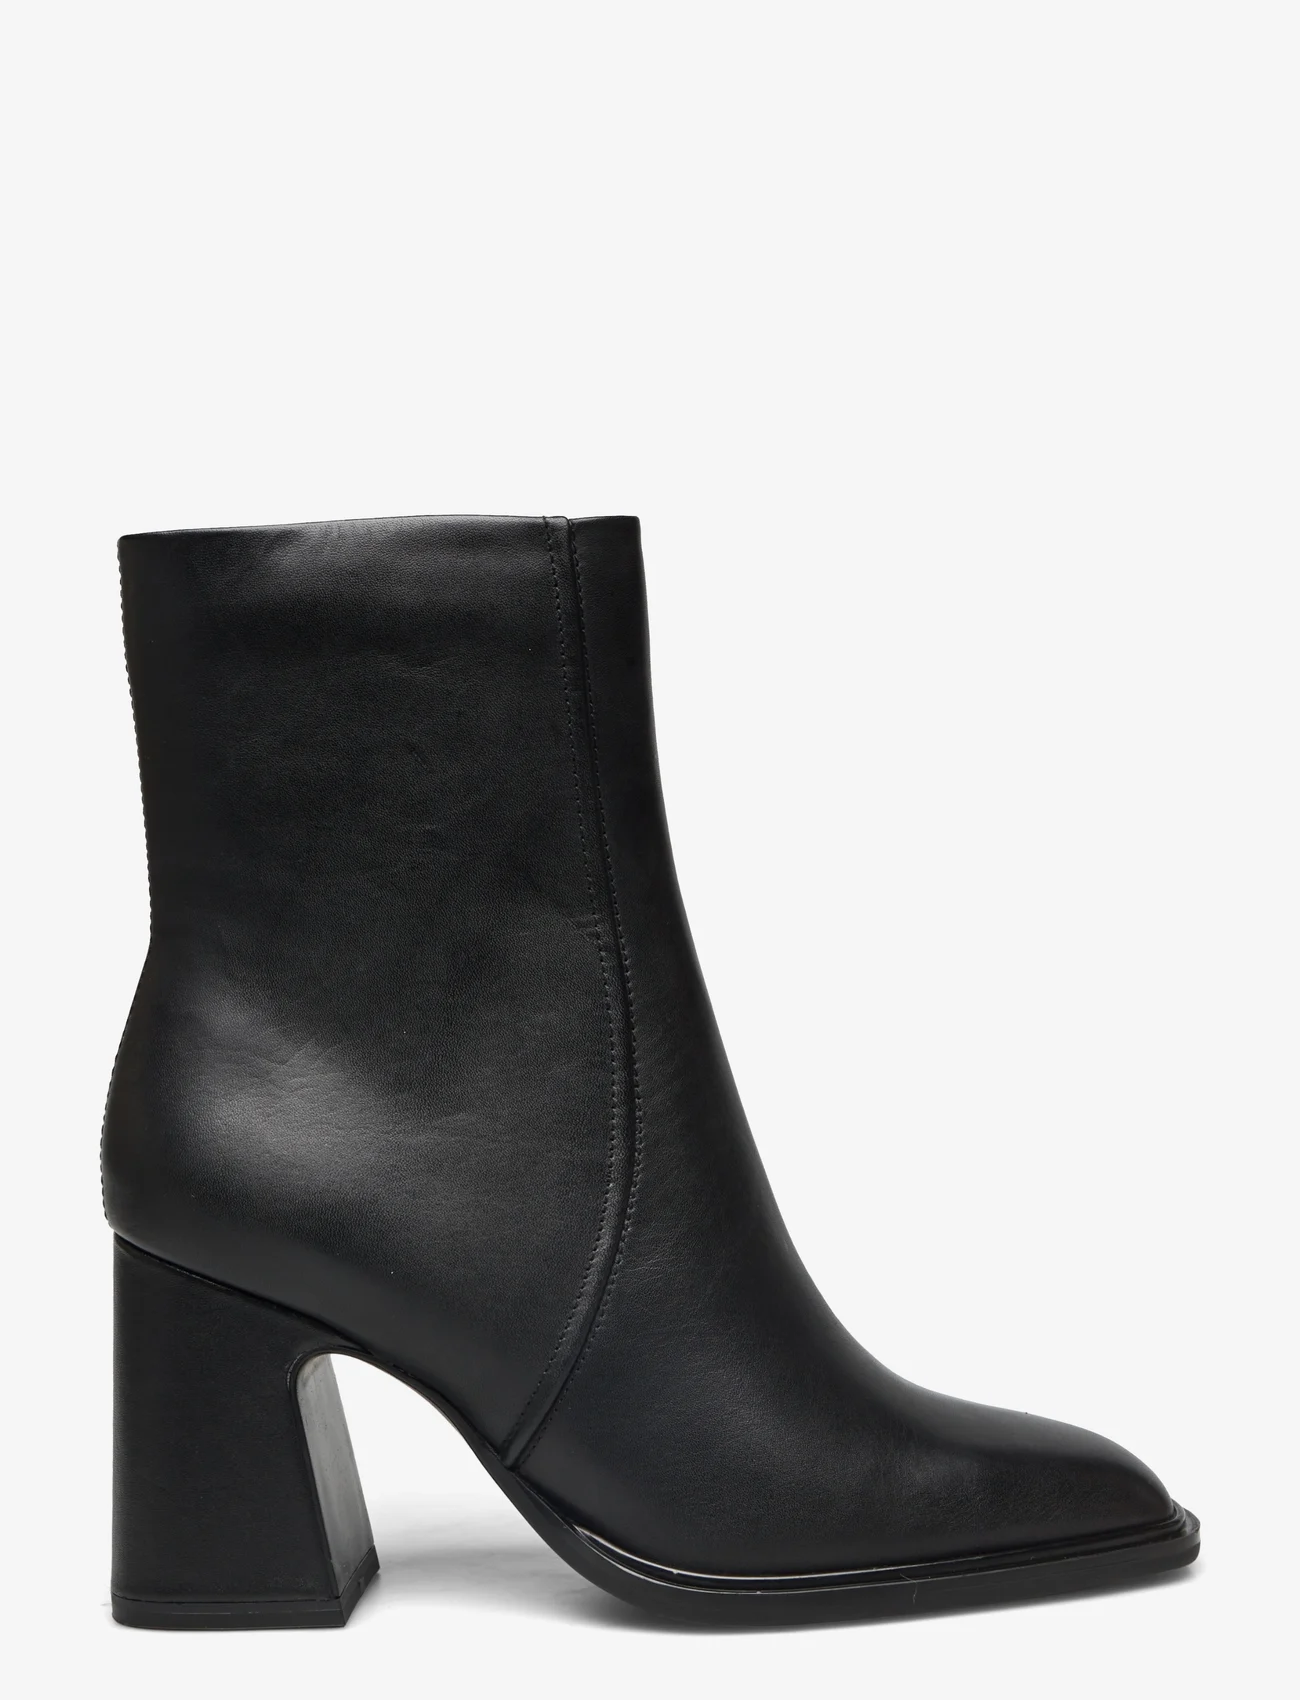 NEWD.Tamaris - Women Boots - hög klack - black - 1